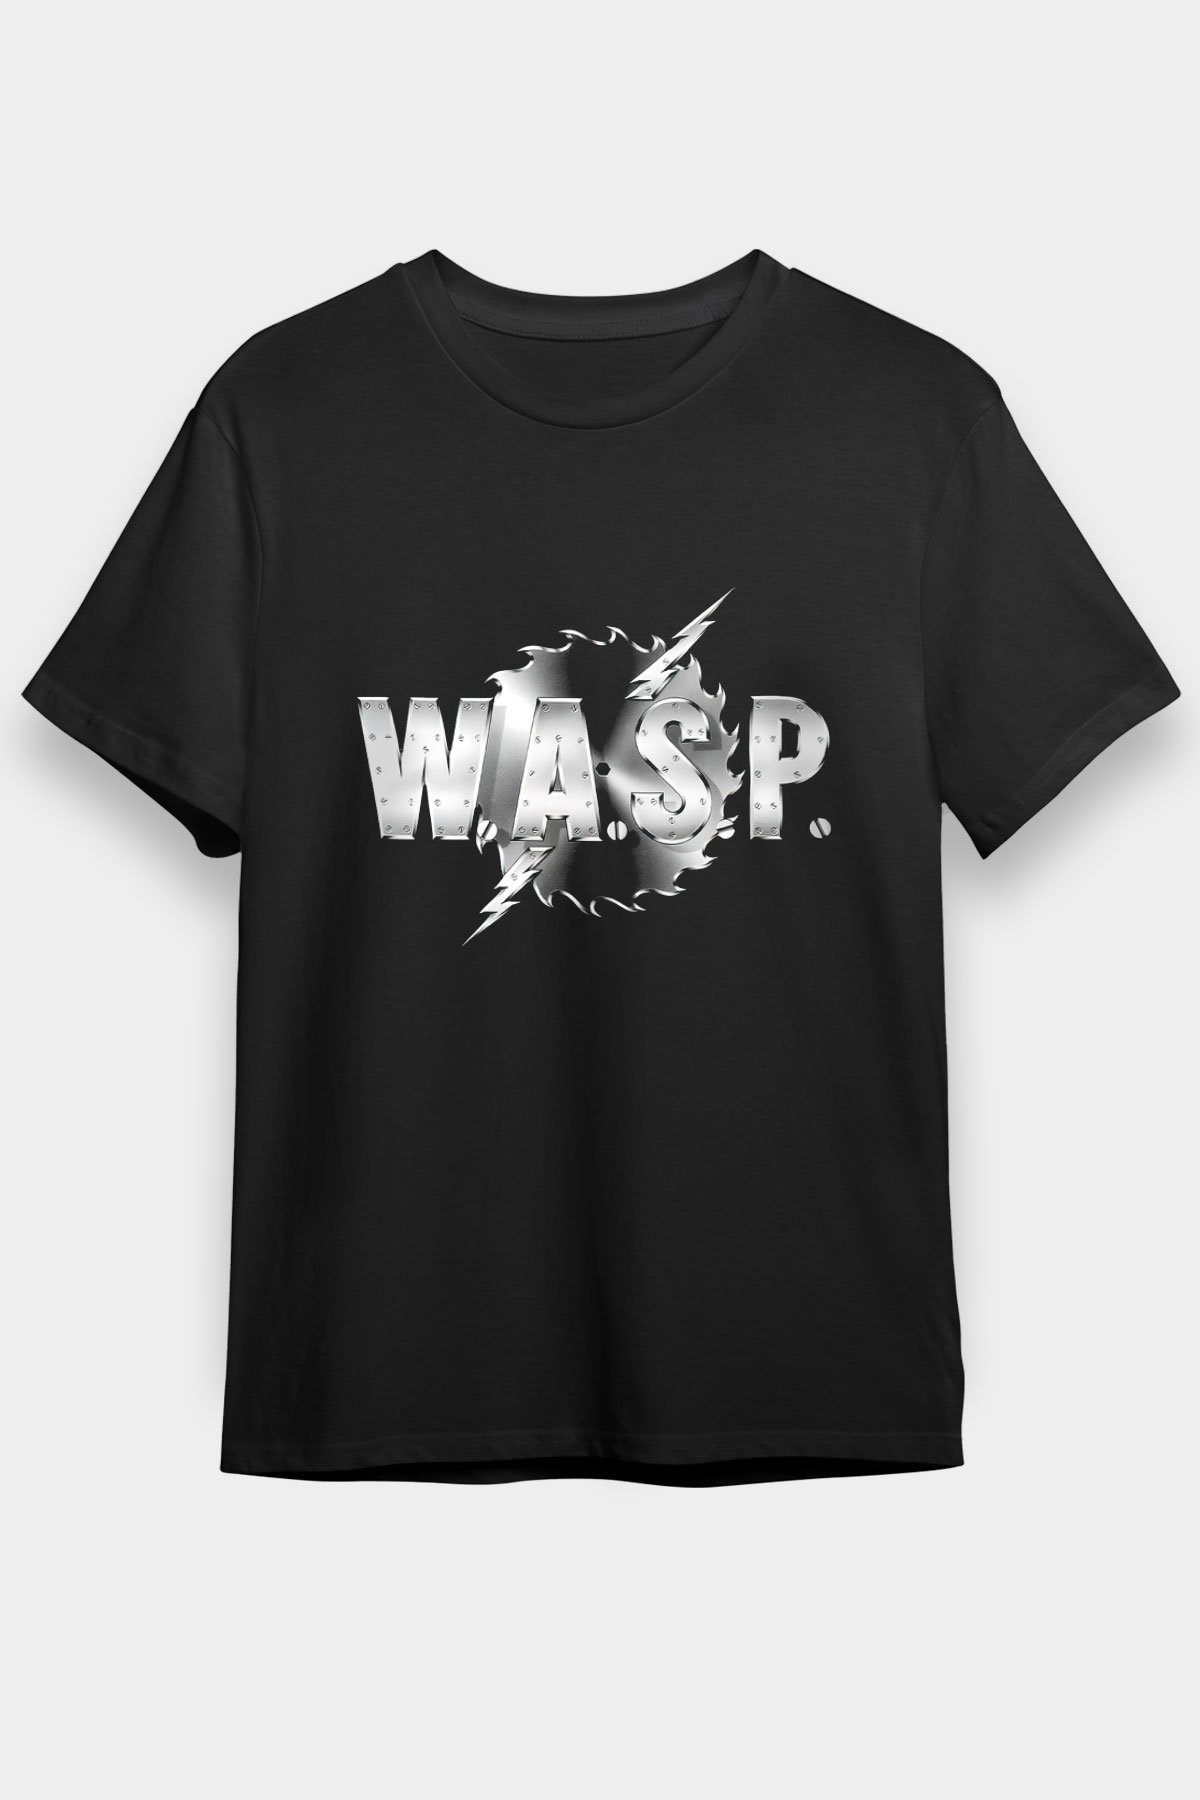 W.A.S.P Black Unisex T-Shirt - Tees - Shirts